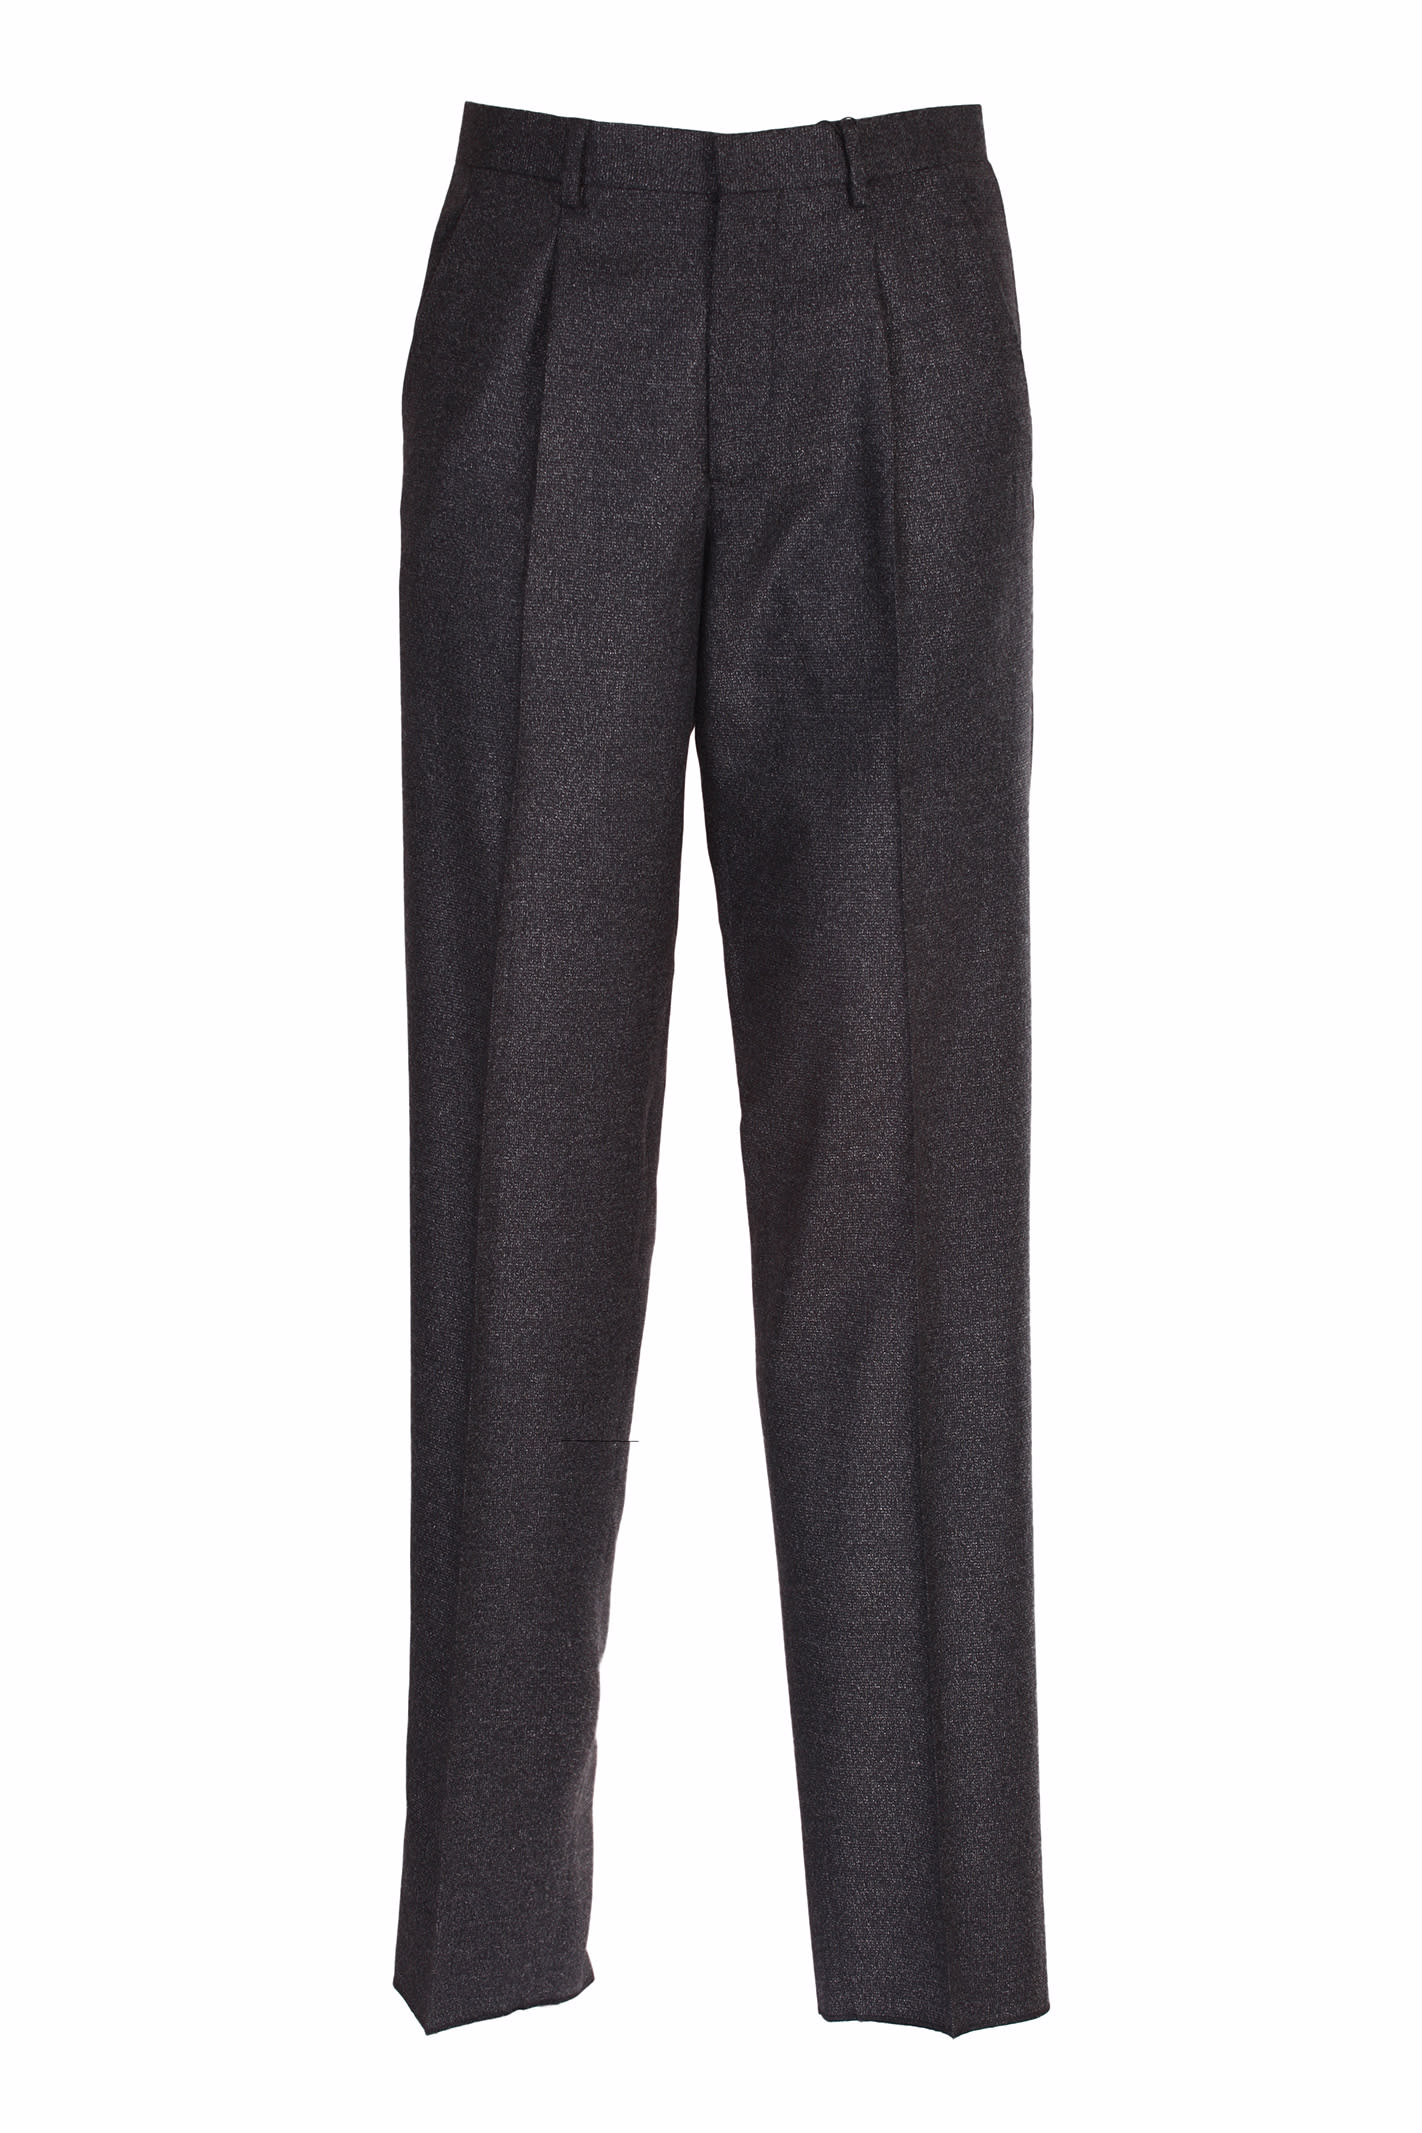 Emporio Armani trousers with pleats